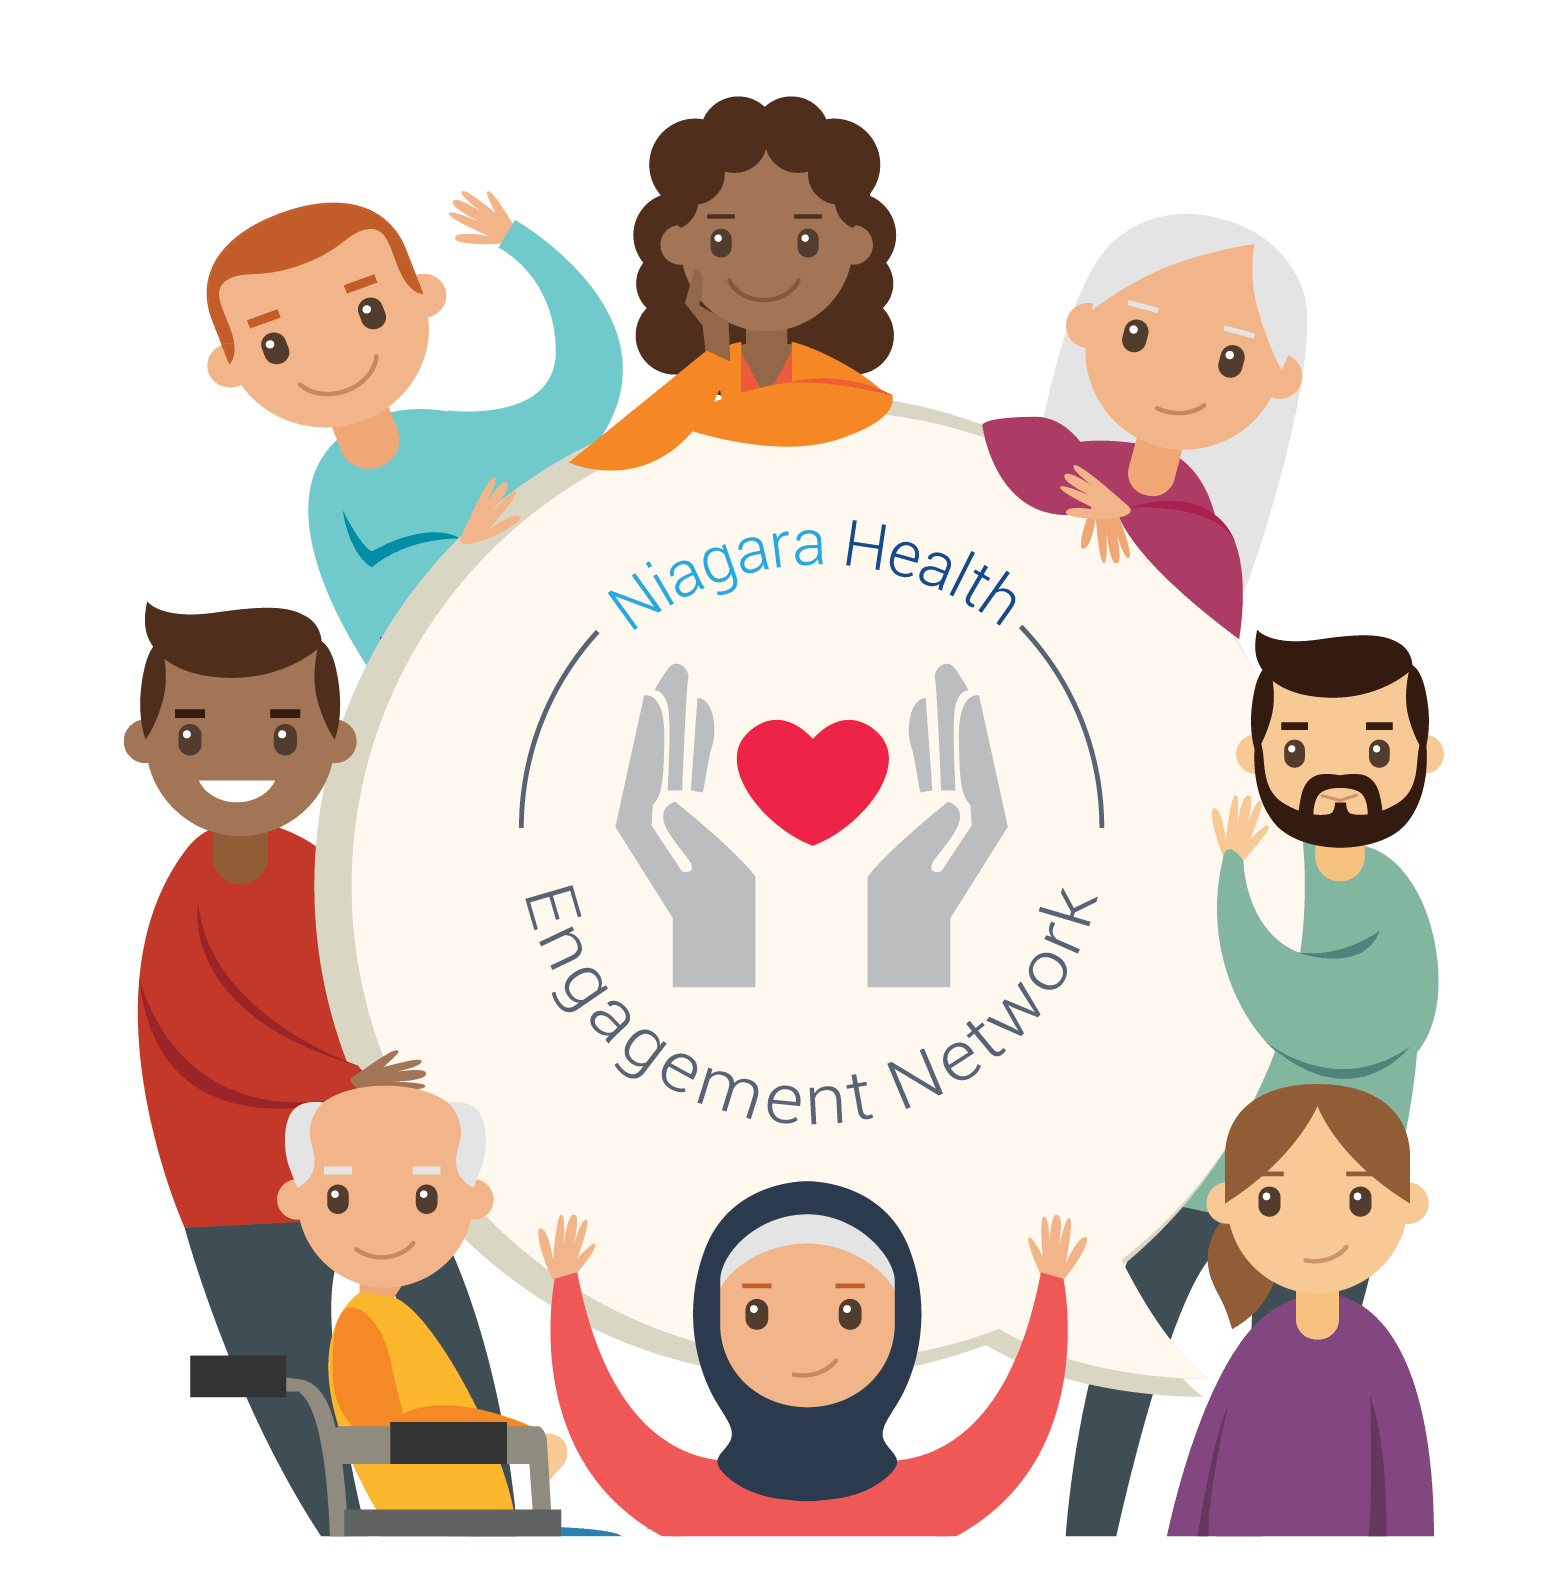 Niagara Health Engagement Network